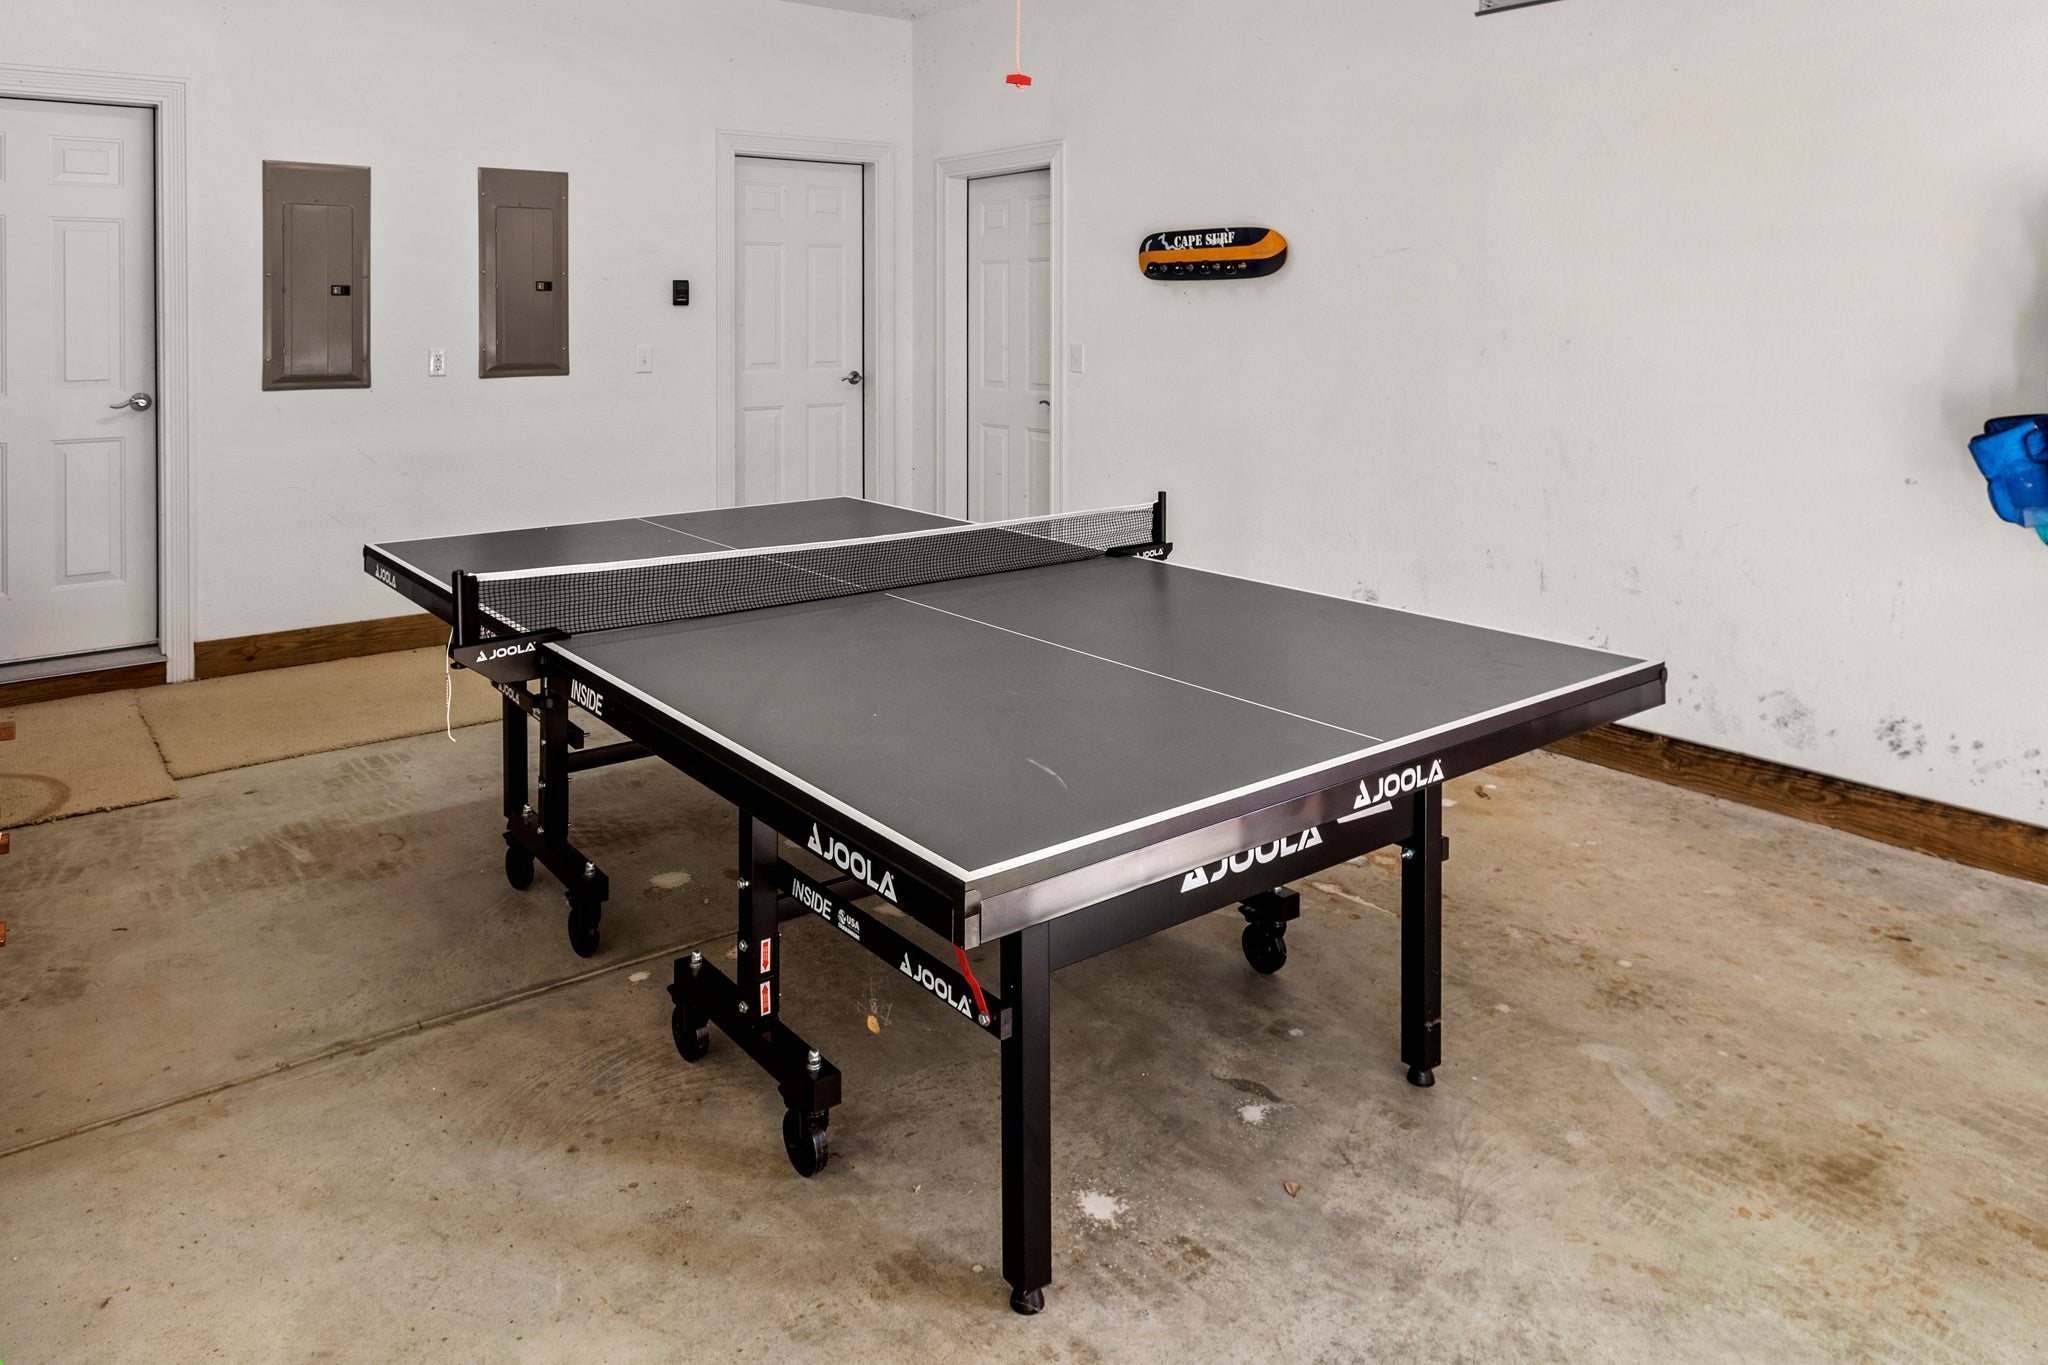 CC124: Corolla Beach House l Garage w/ Ping Pong Table